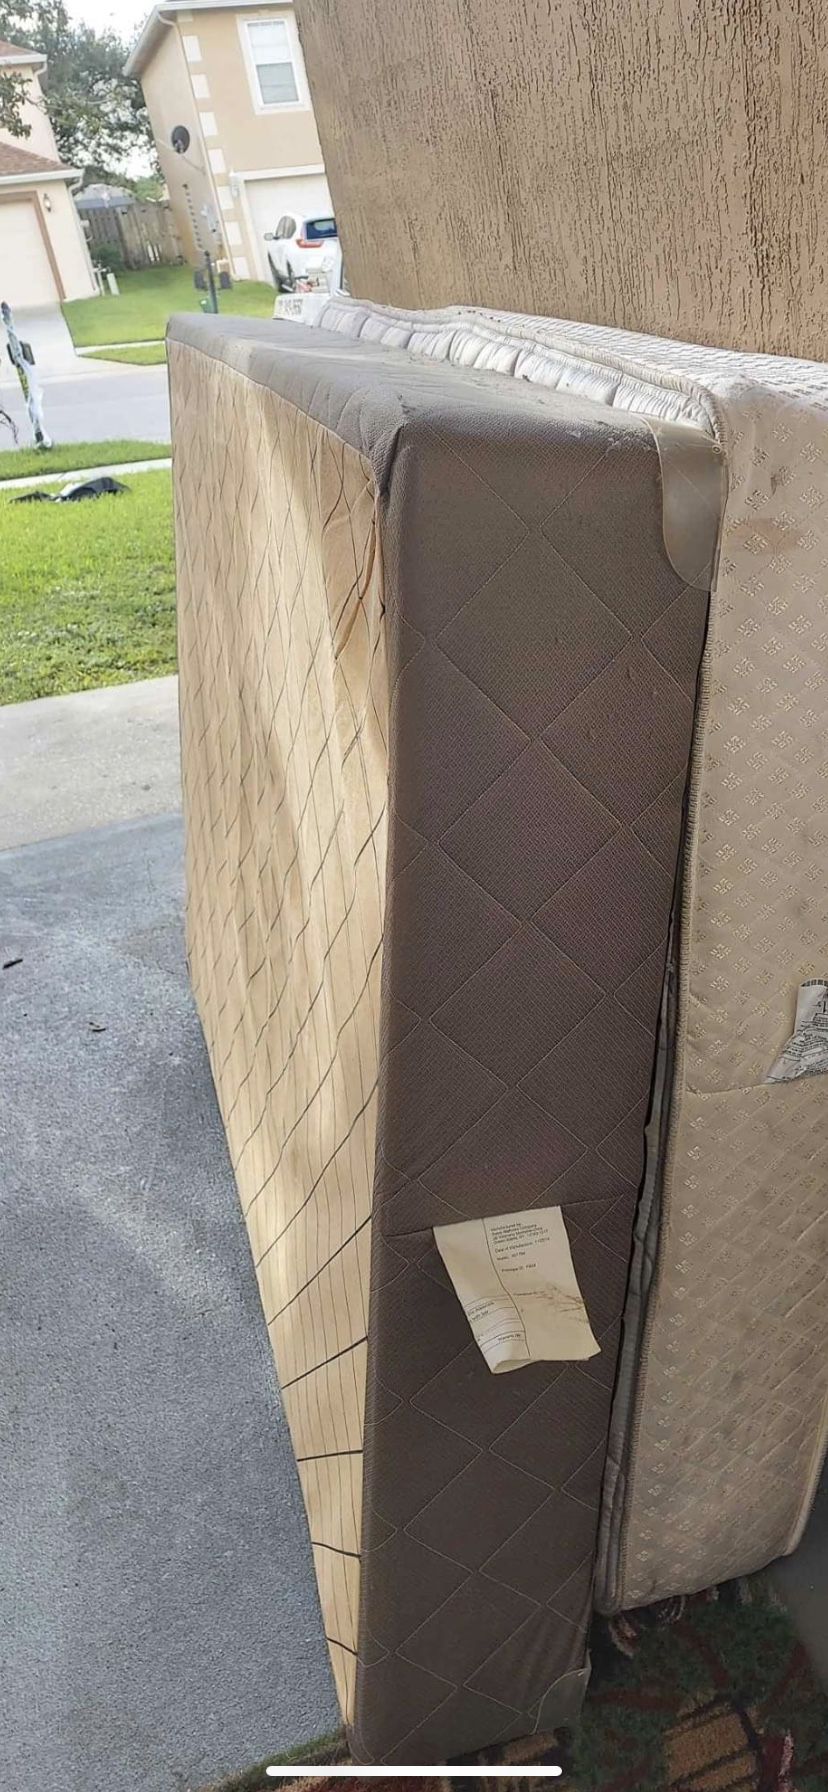 Full mattress and box spring